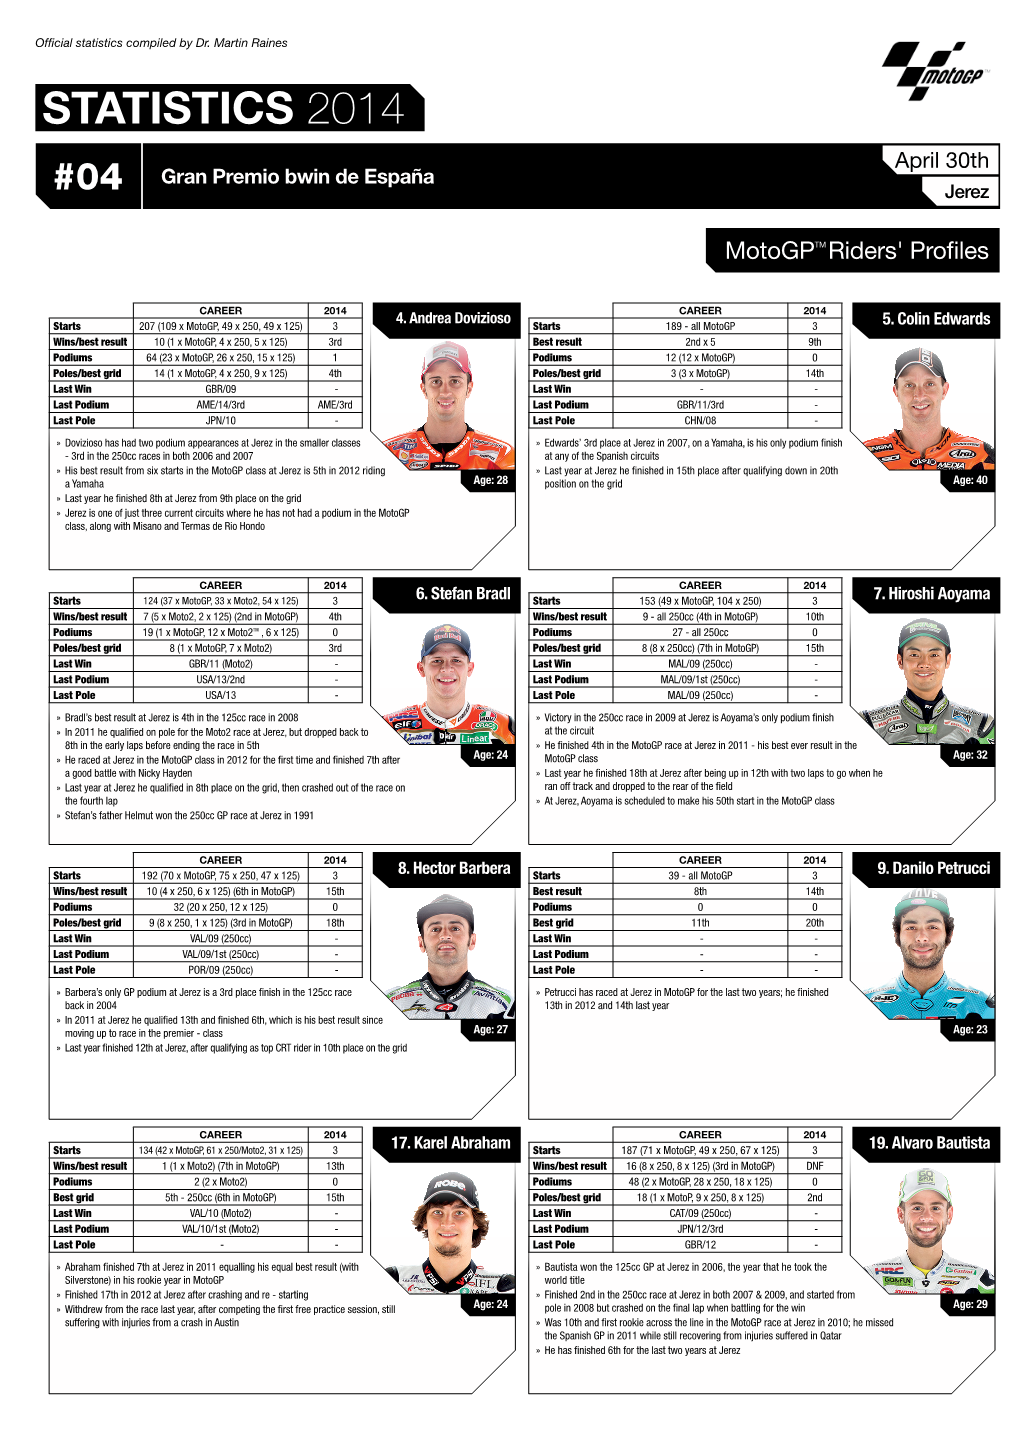 STATISTICS 2014 April 30Th Gran Premio Bwin De España #04 Jerez